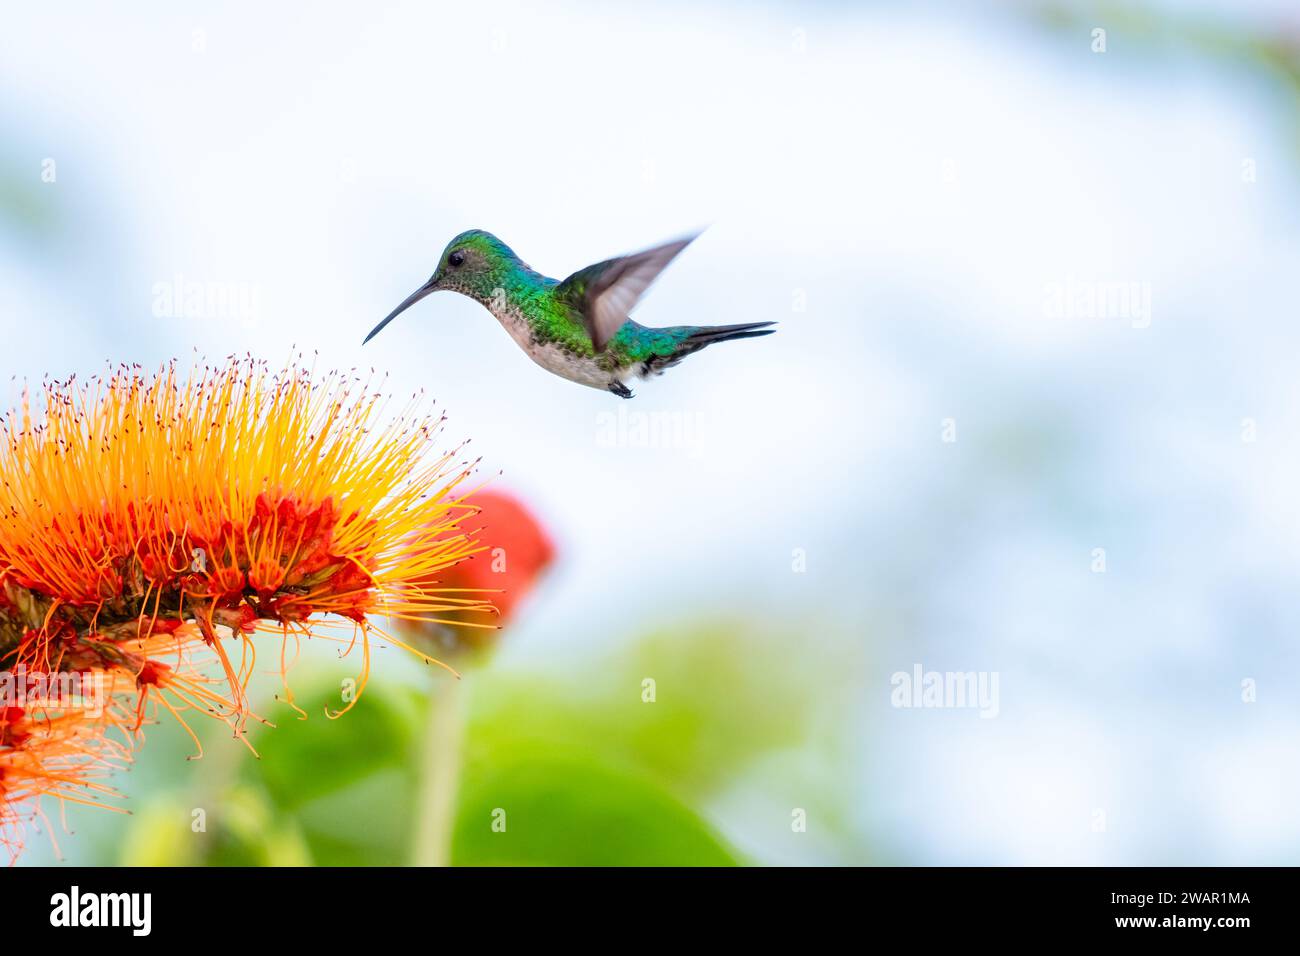 Blue-chinned Sapphire hummingbird, Chlorestes notata, in flight feeding on a tropical orange flower. Stock Photo